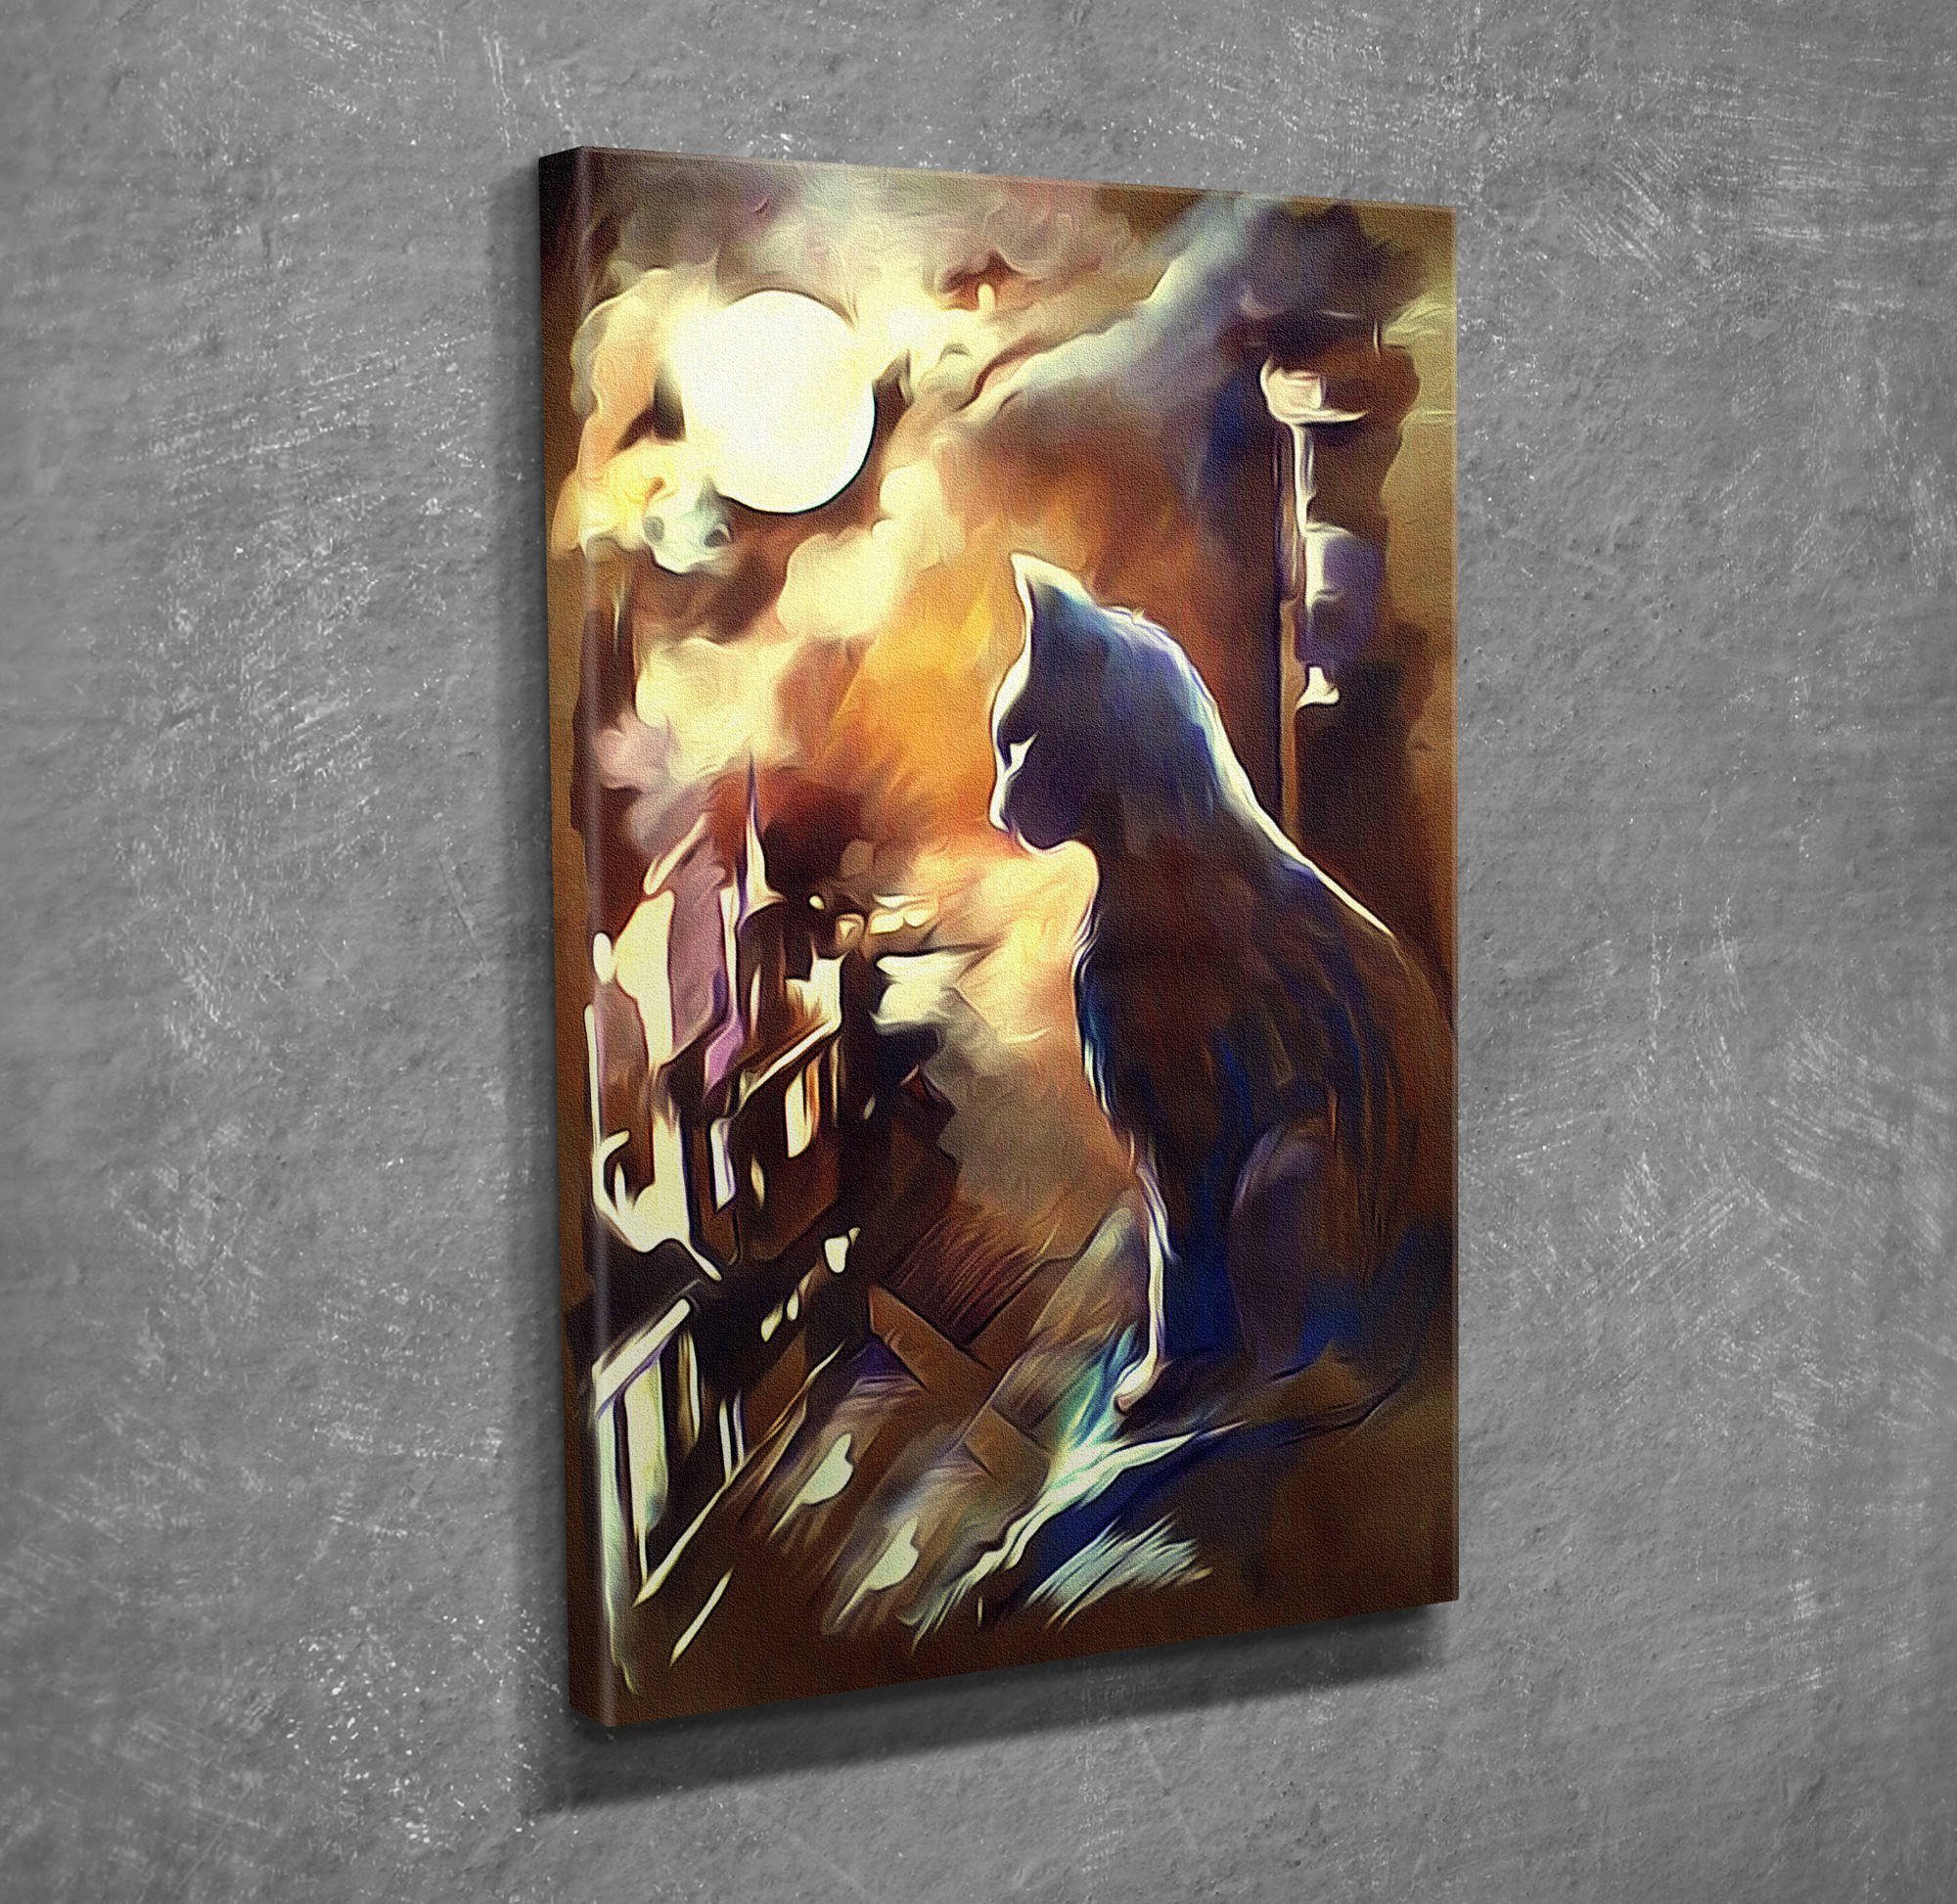 Wallity Leinwandbild MJS3224, Bunt, 30 x 40 cm, 100% Leinwand